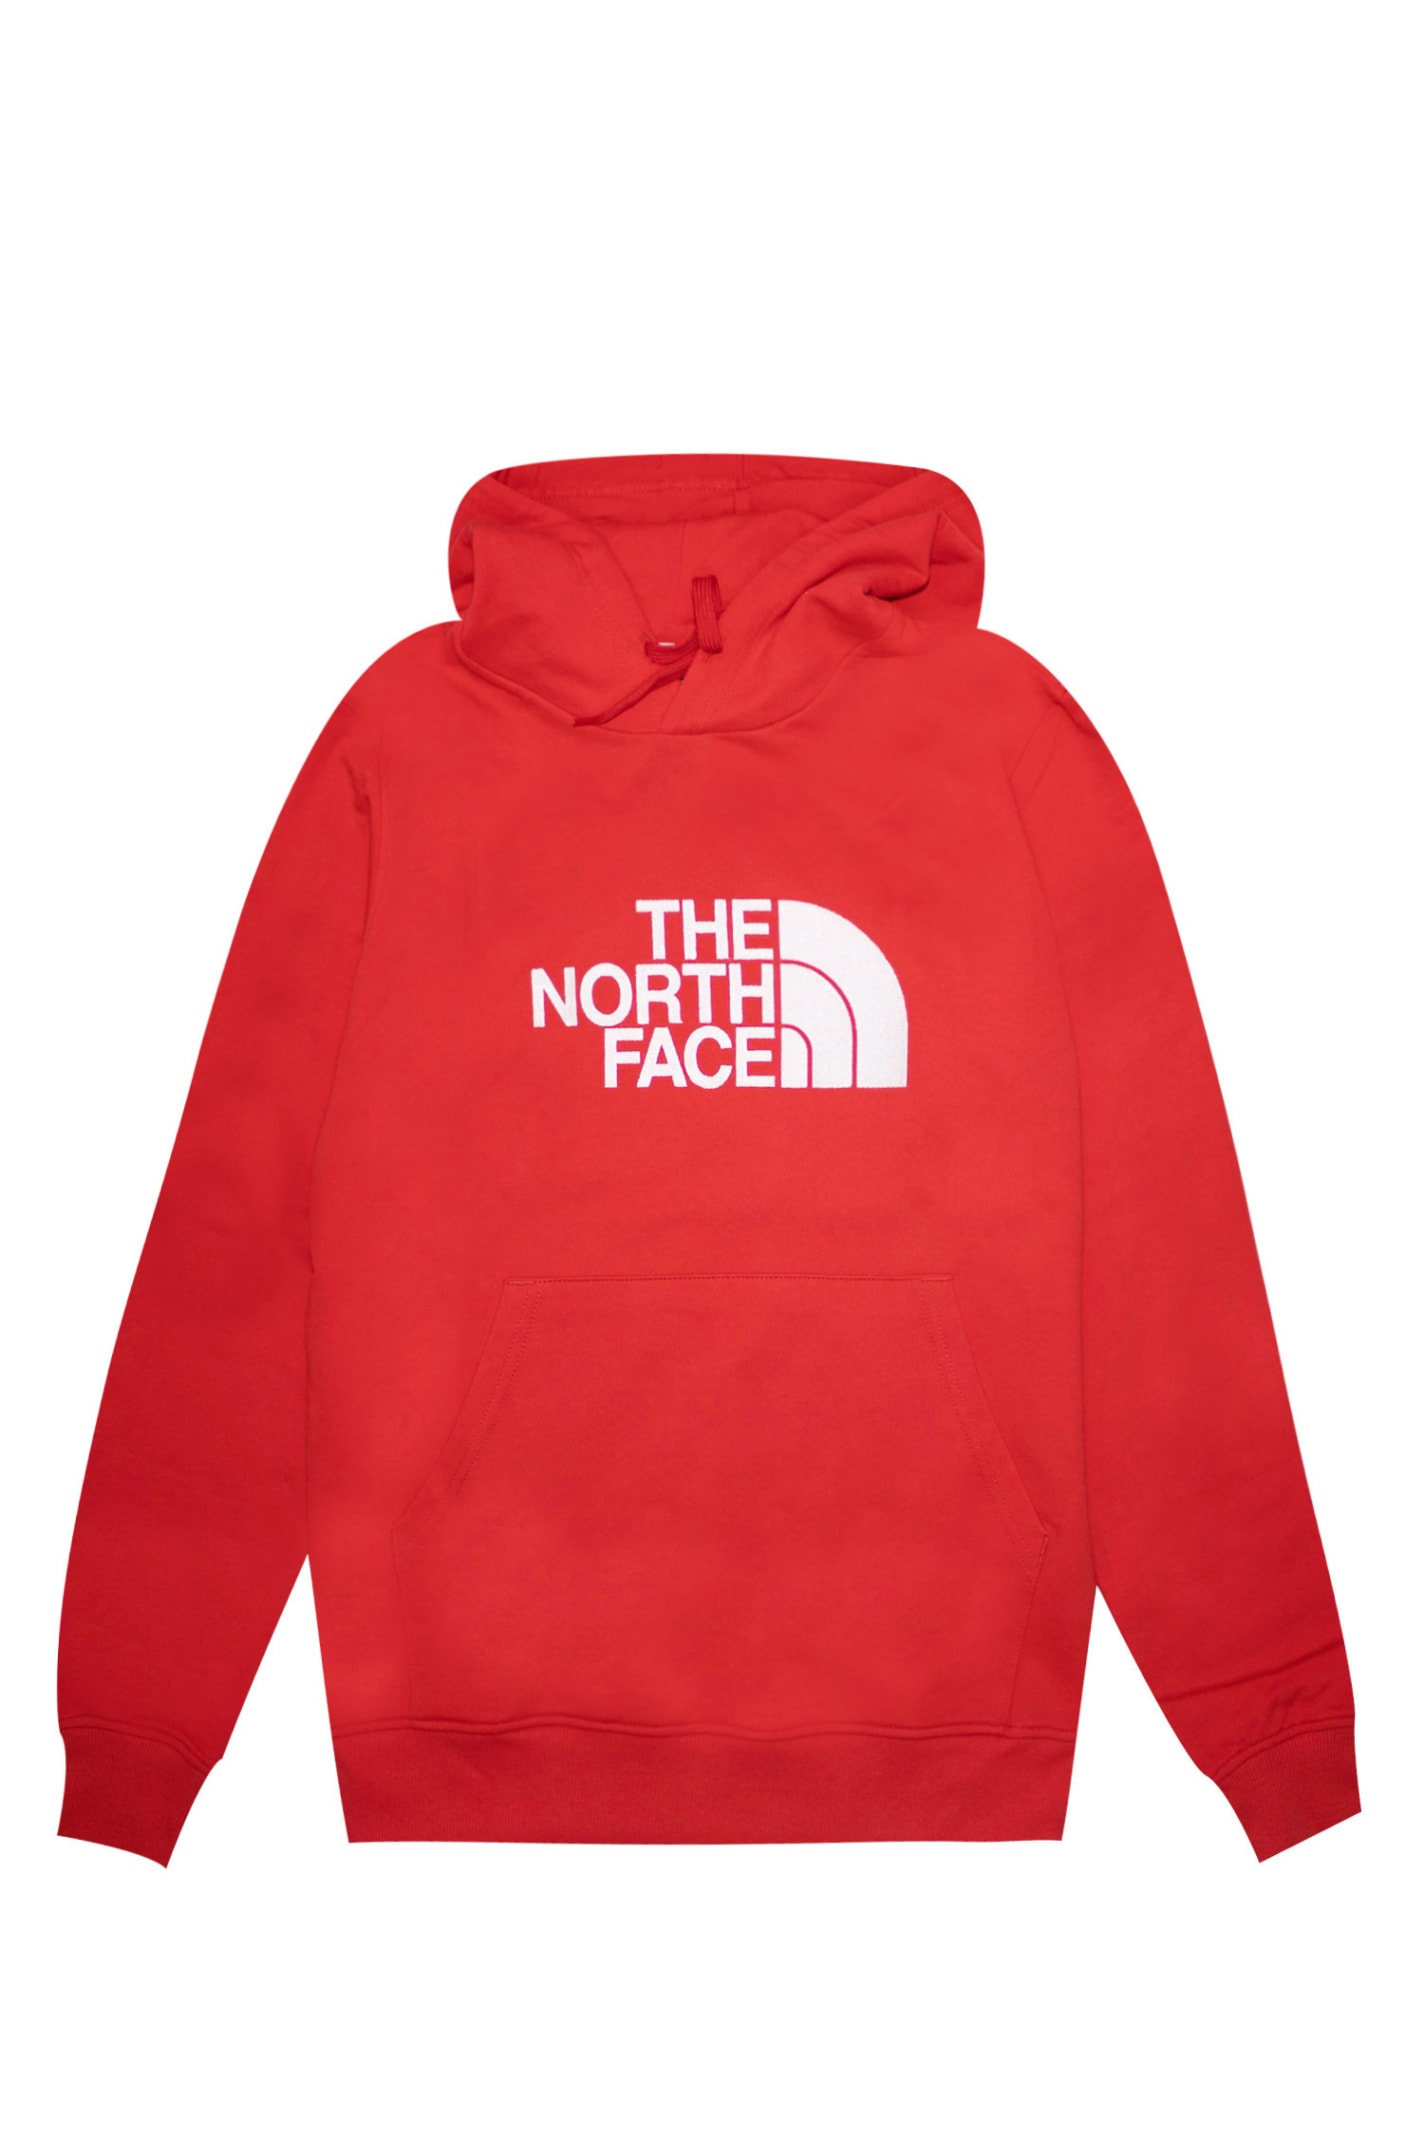 The North Face Cotton Sweatshirt